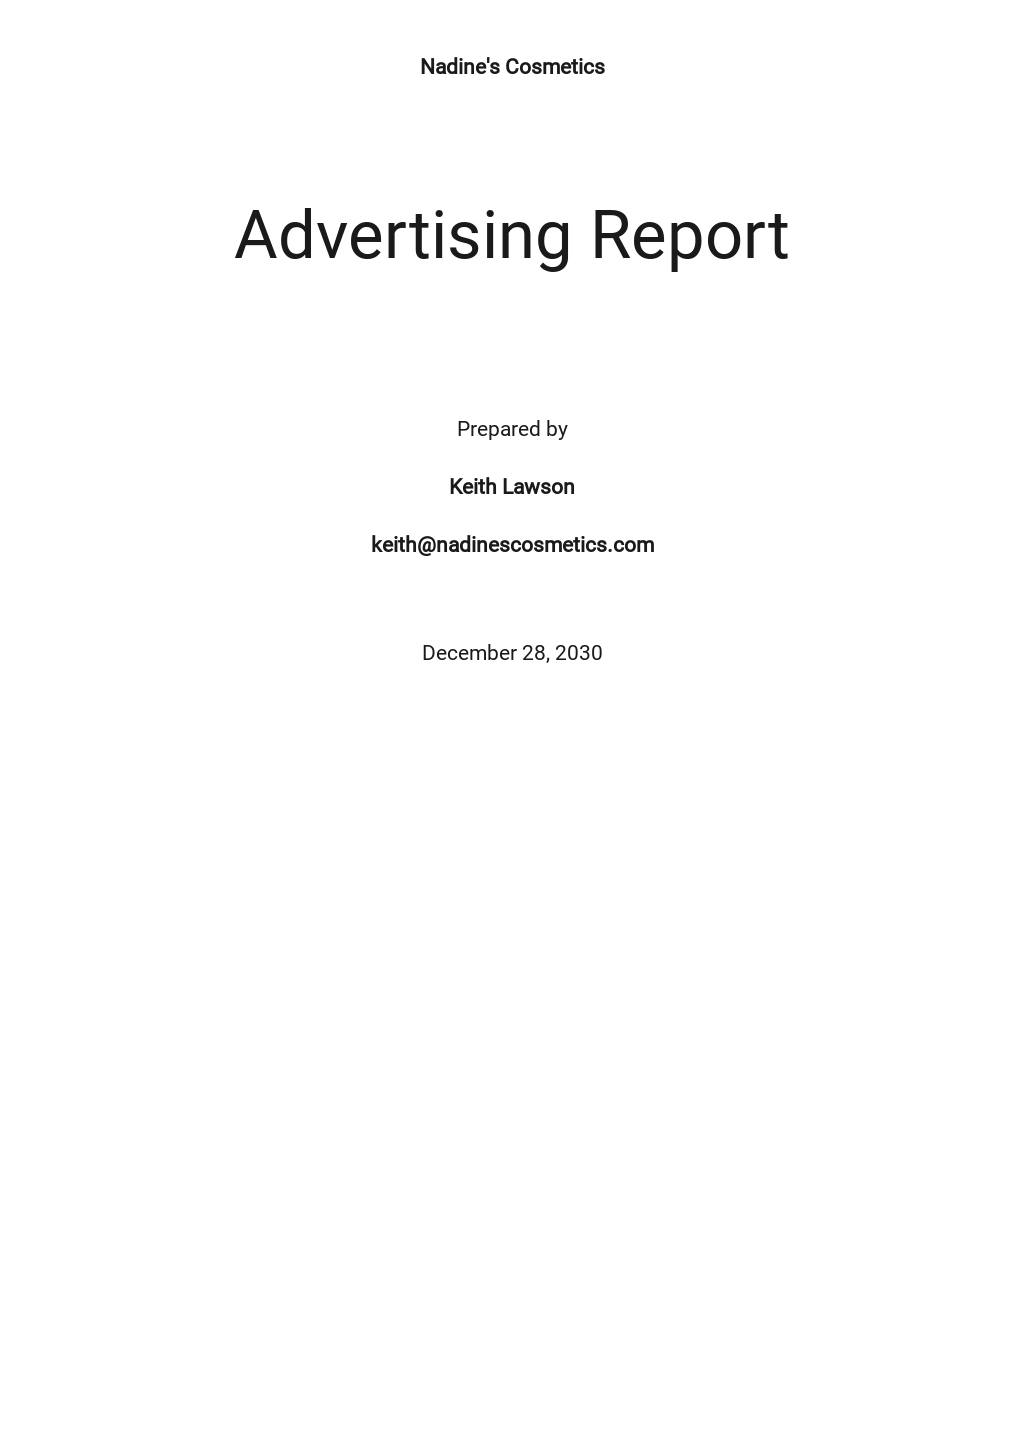 Advertising Report Template - Google Docs, Word